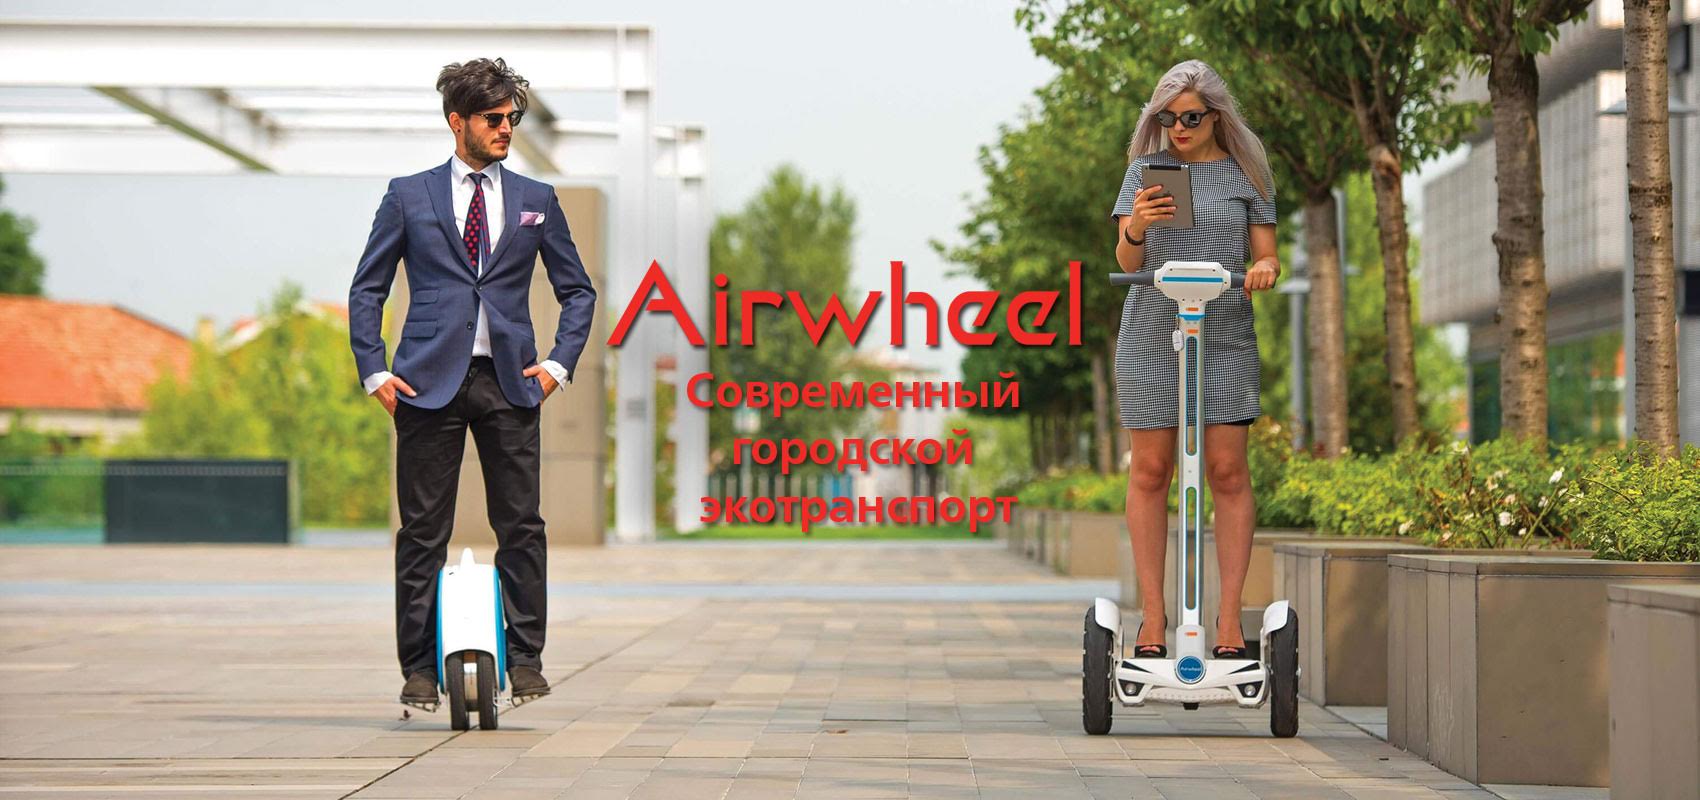 Электротранспорт Airwheel